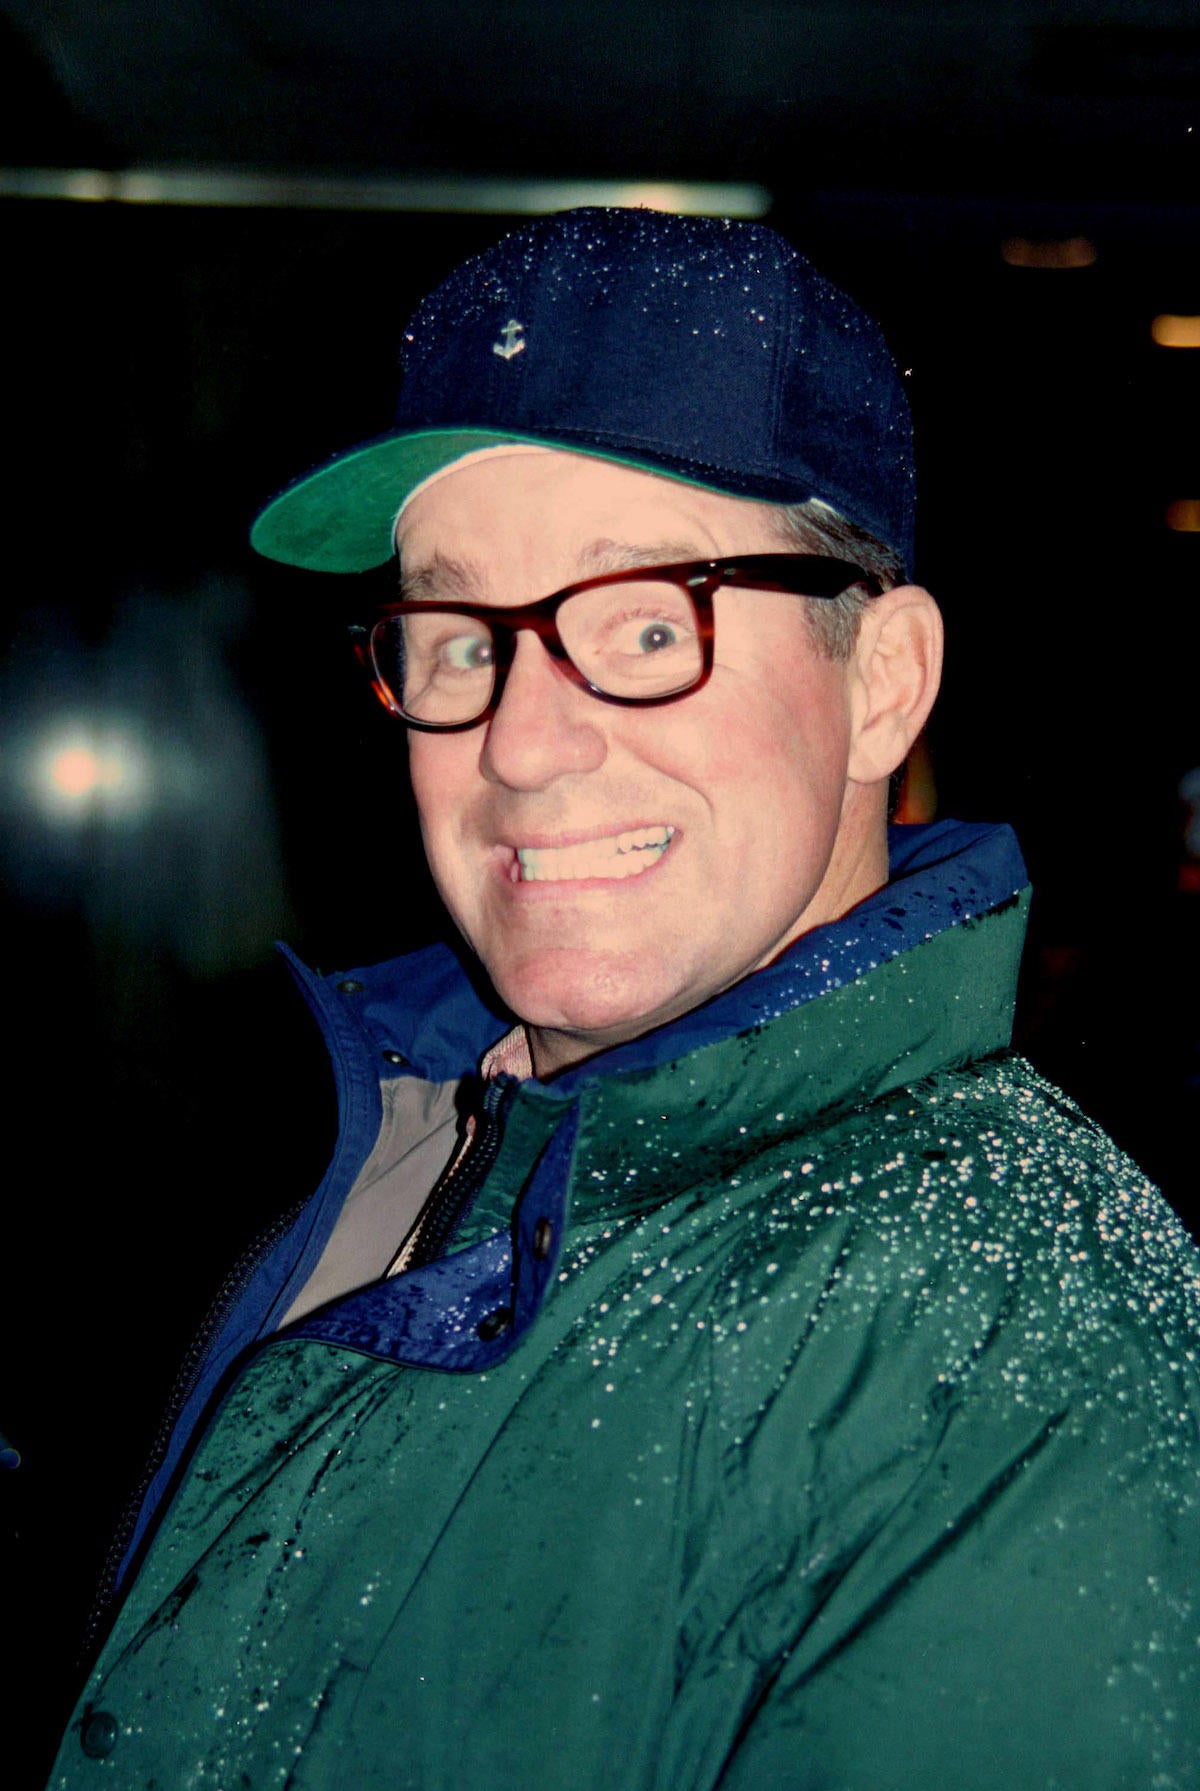 Phil Hartman sighting in Rockefeller Center – February 10, 1994